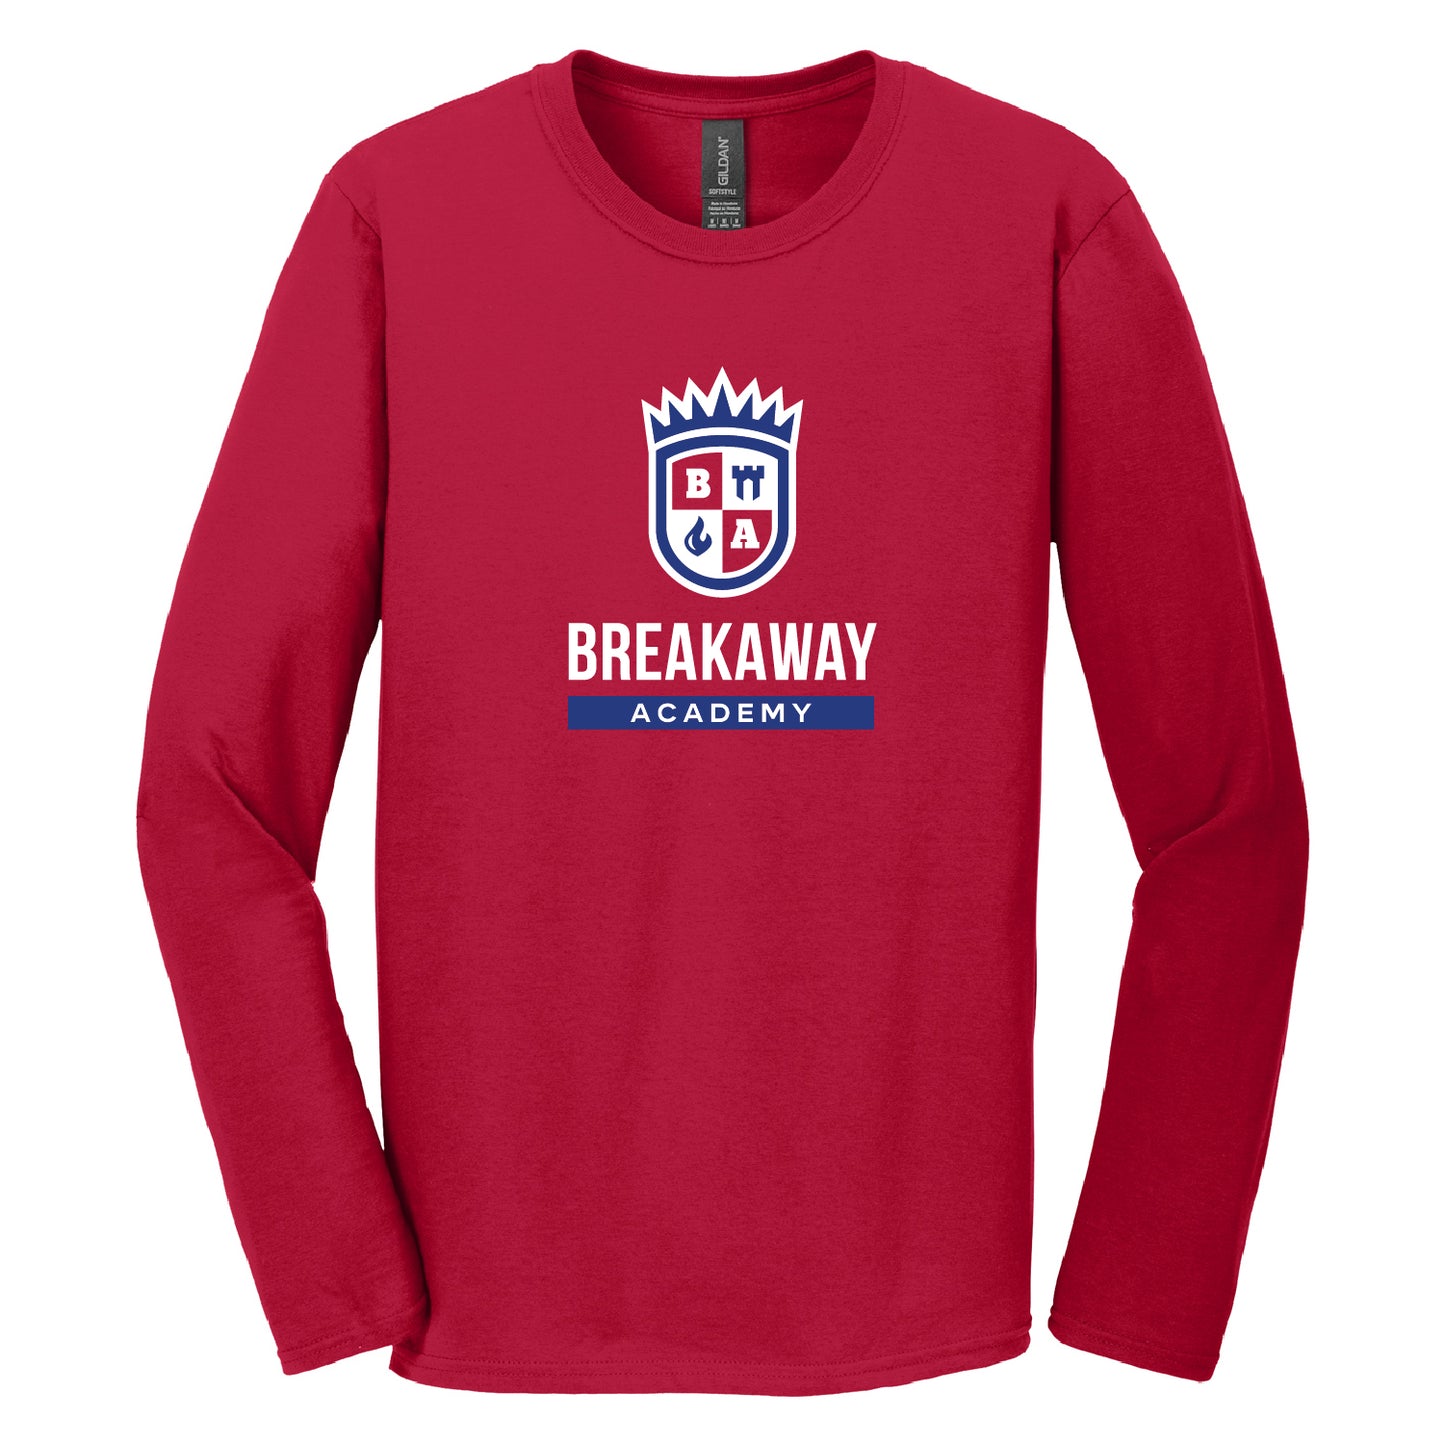 Breakaway Academy Long Sleeve T-Shirt